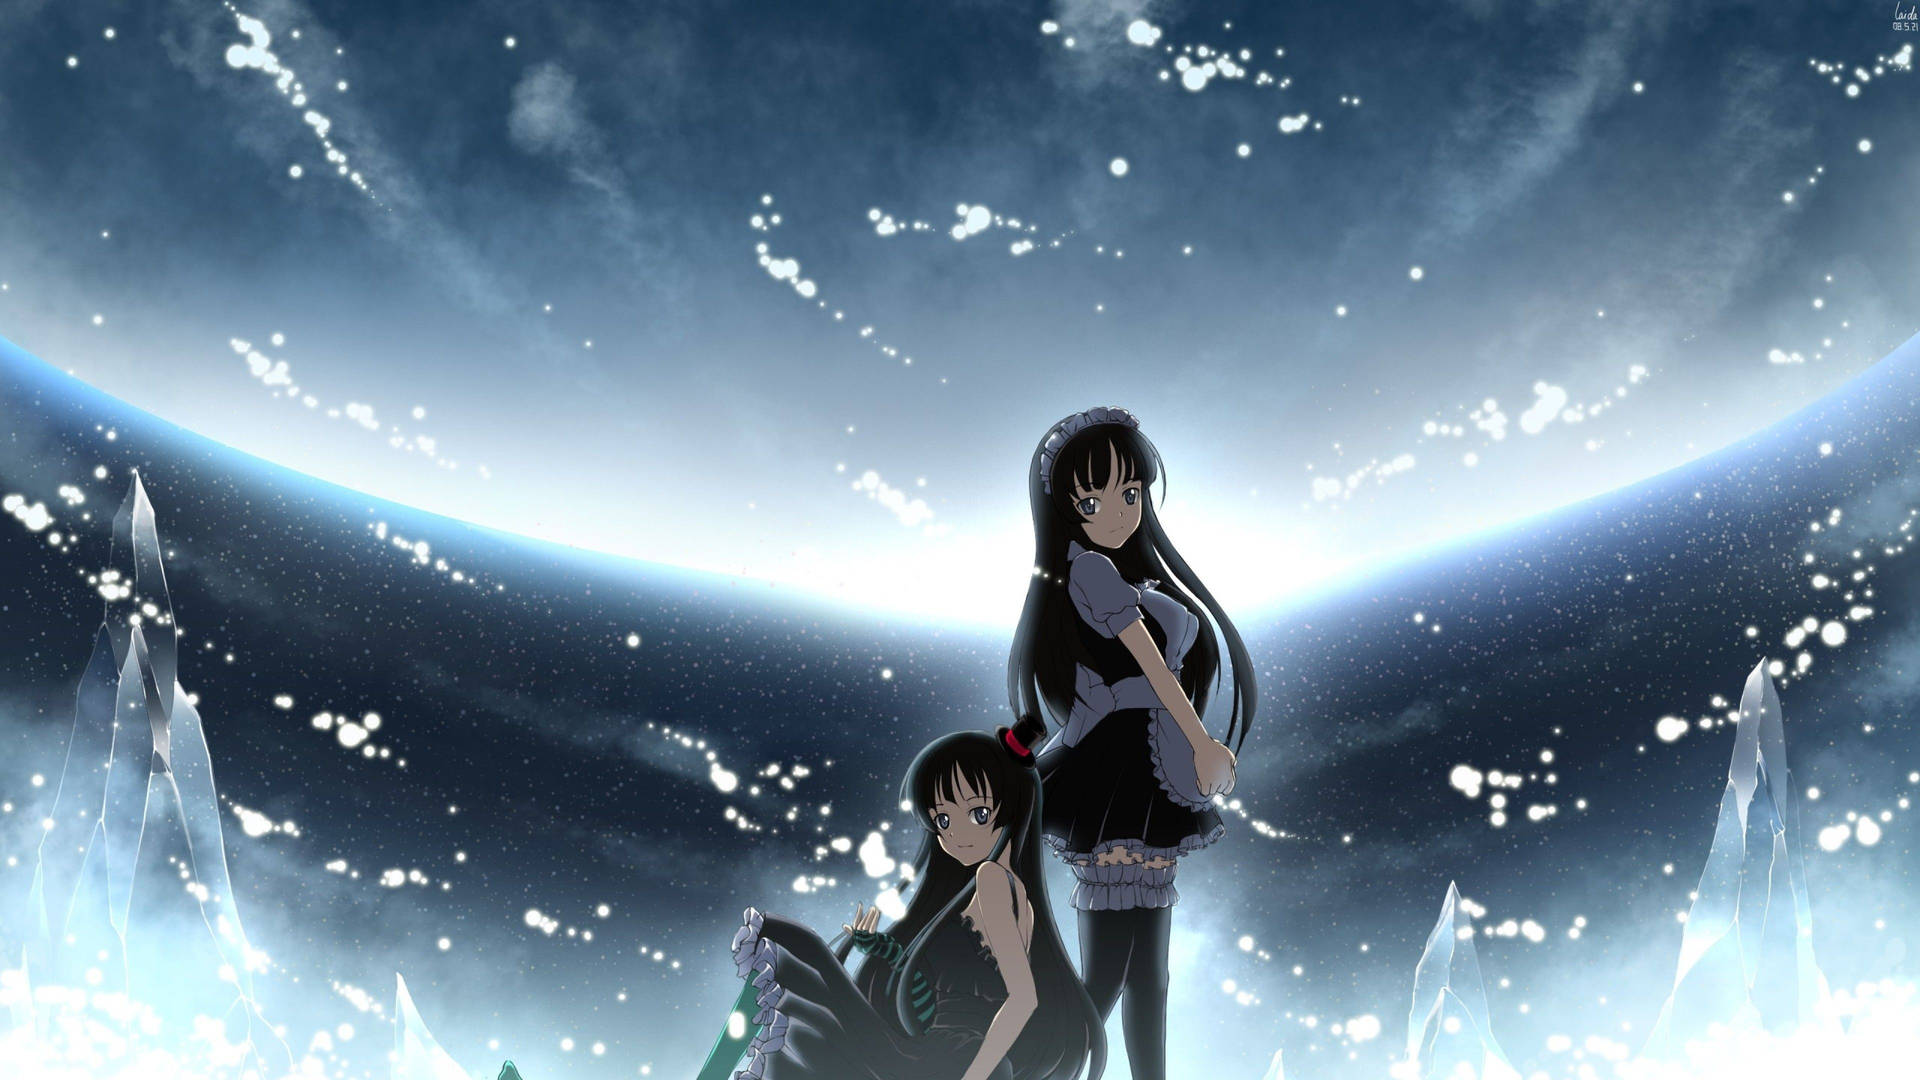 Mio Akiyama from K-On! Anime in 3840X2160 resolution Wallpaper